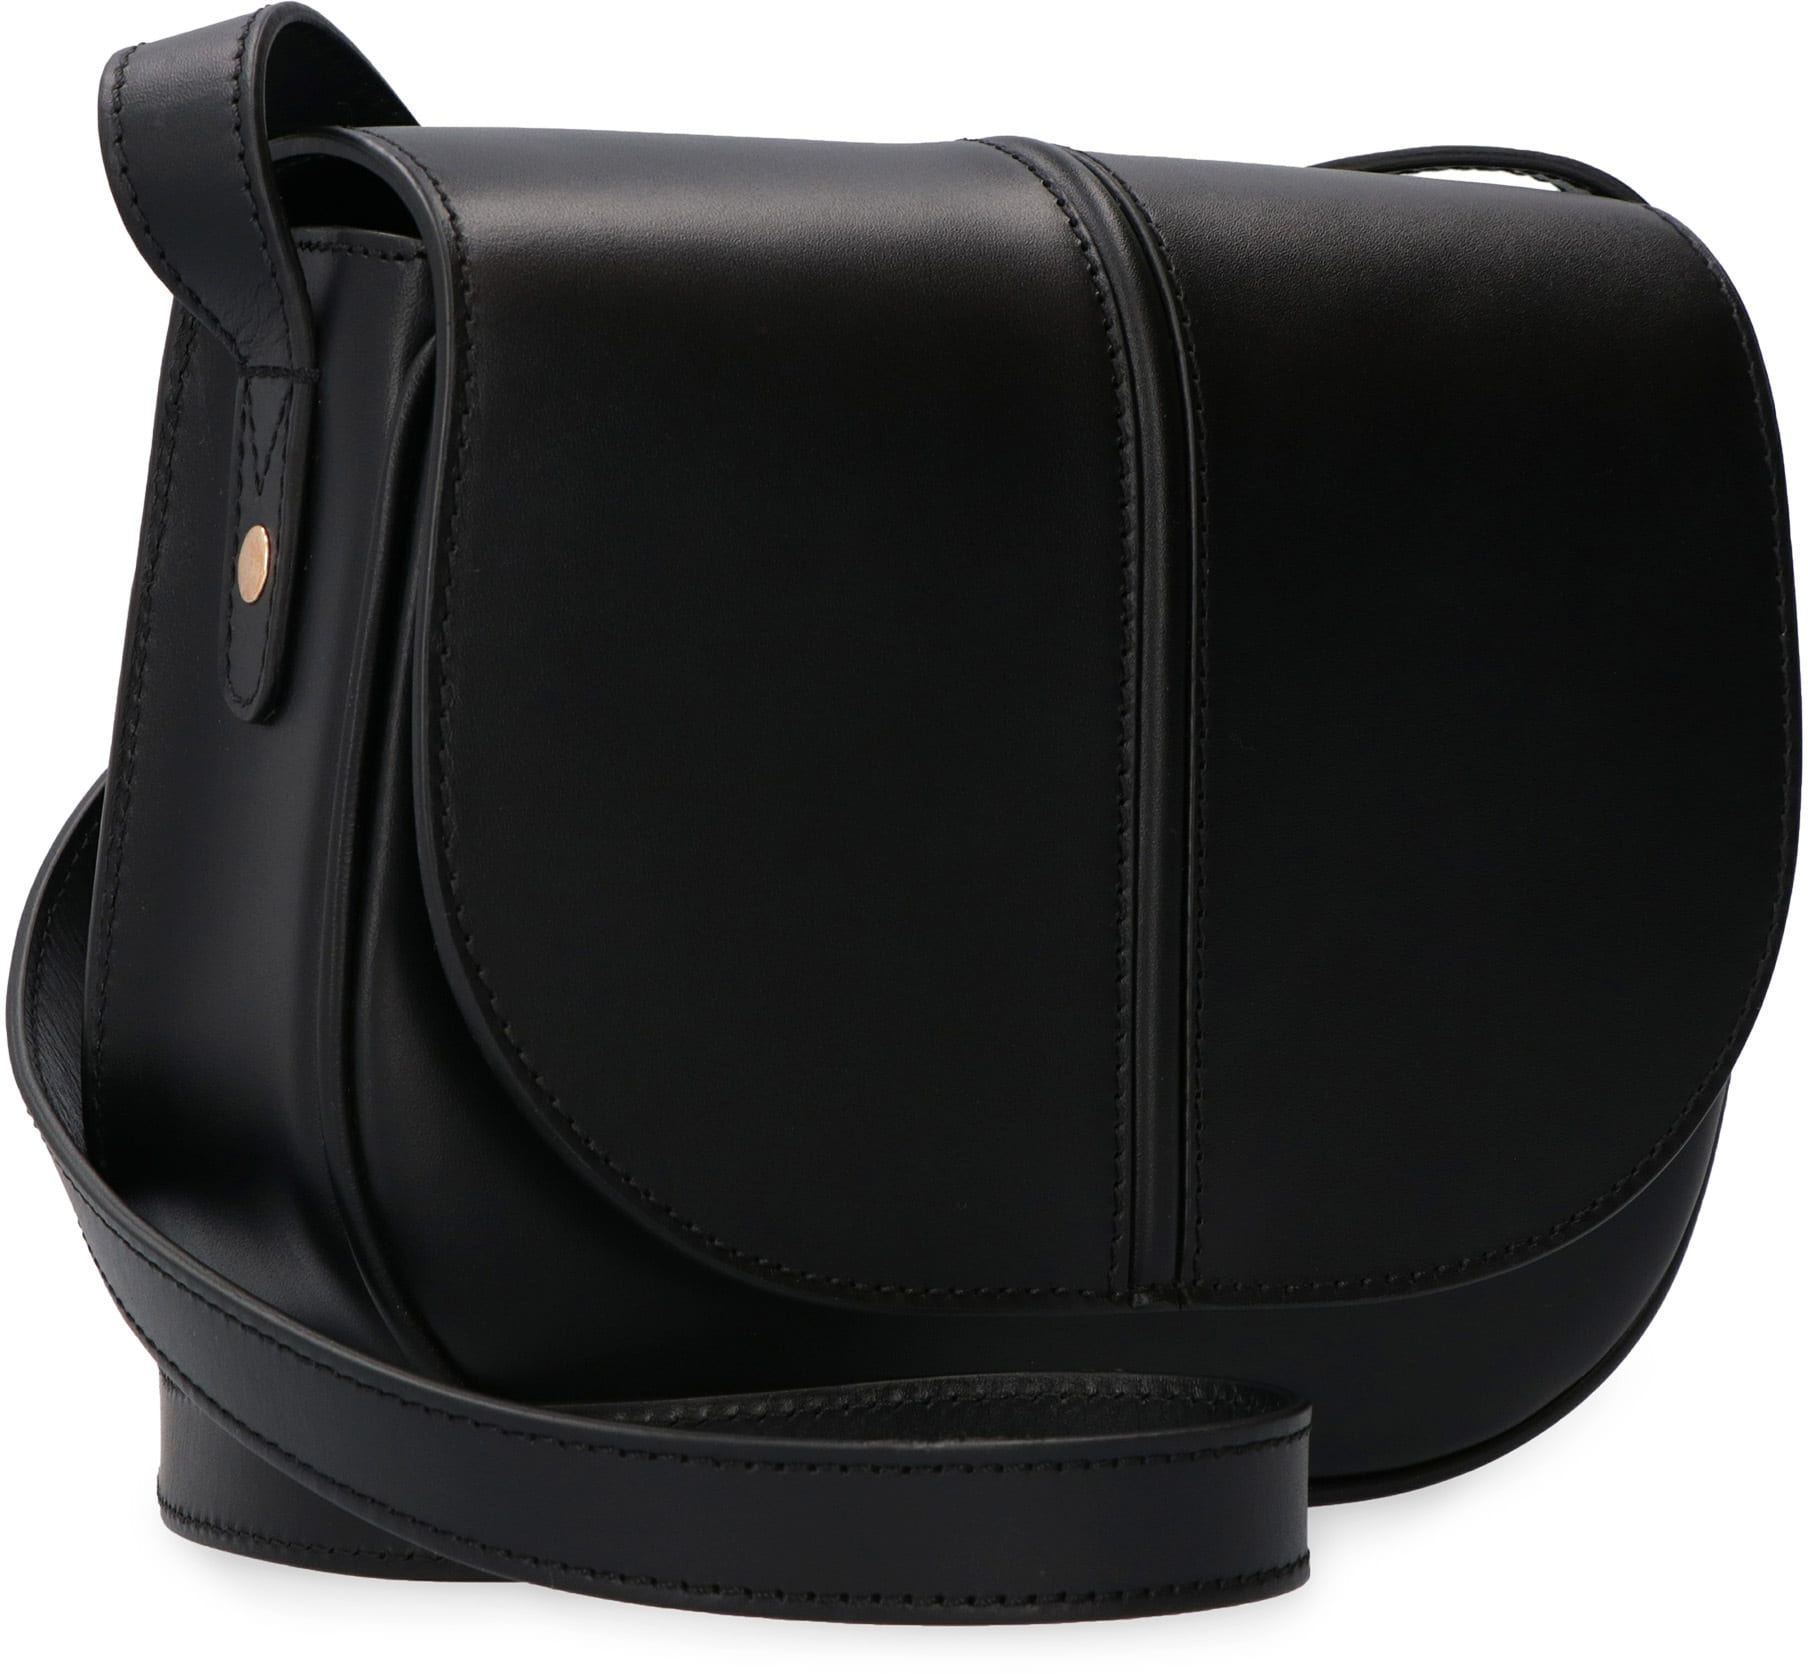 Betty Medium Leather Crossbody Bag in Black - A P C